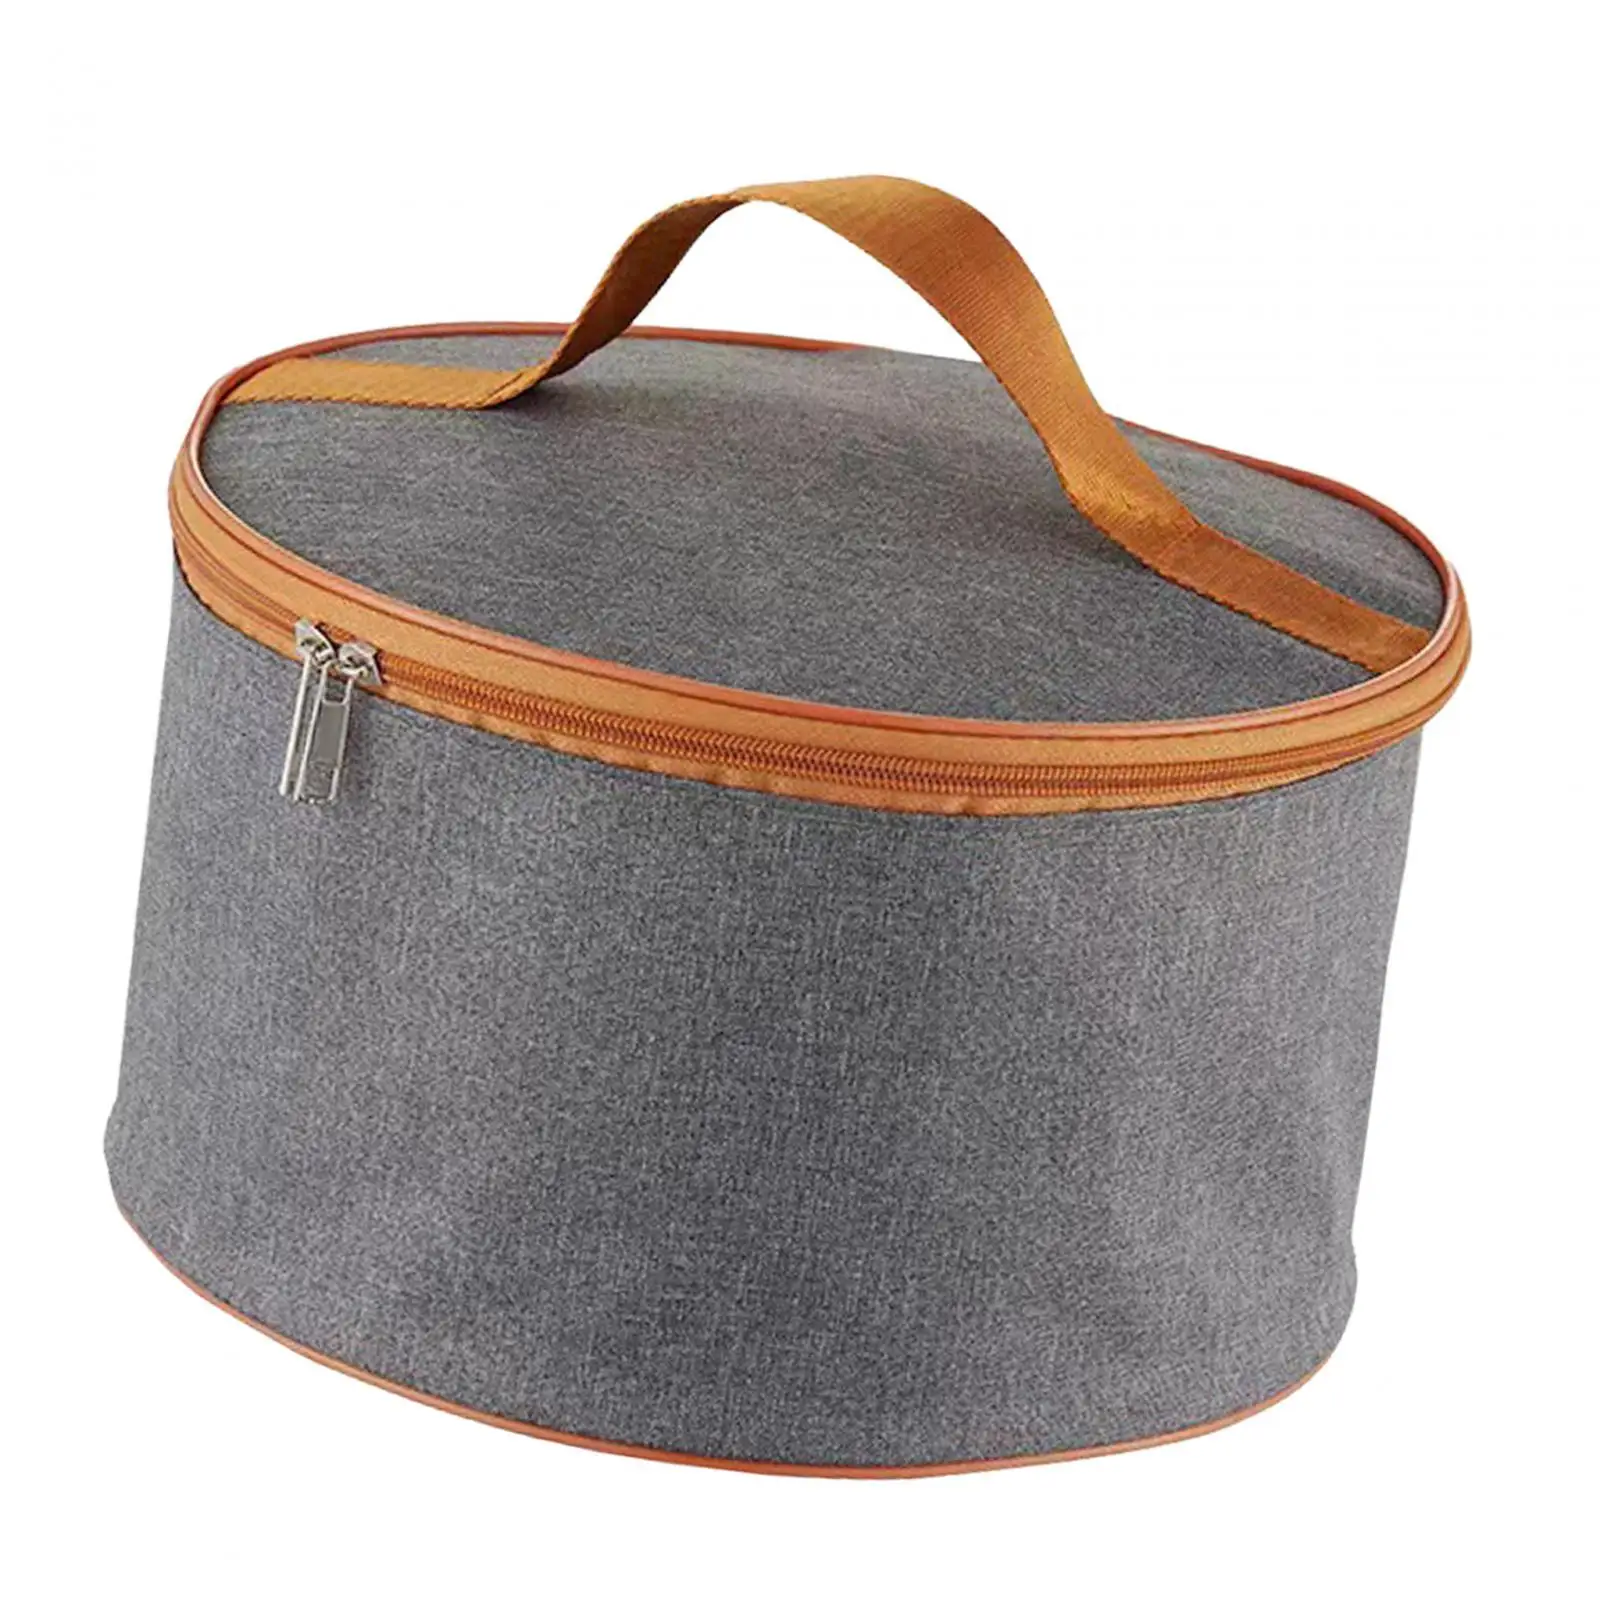 Camping Cookware Carry Bag Waterproof Portable Camping Pot Storage Bag